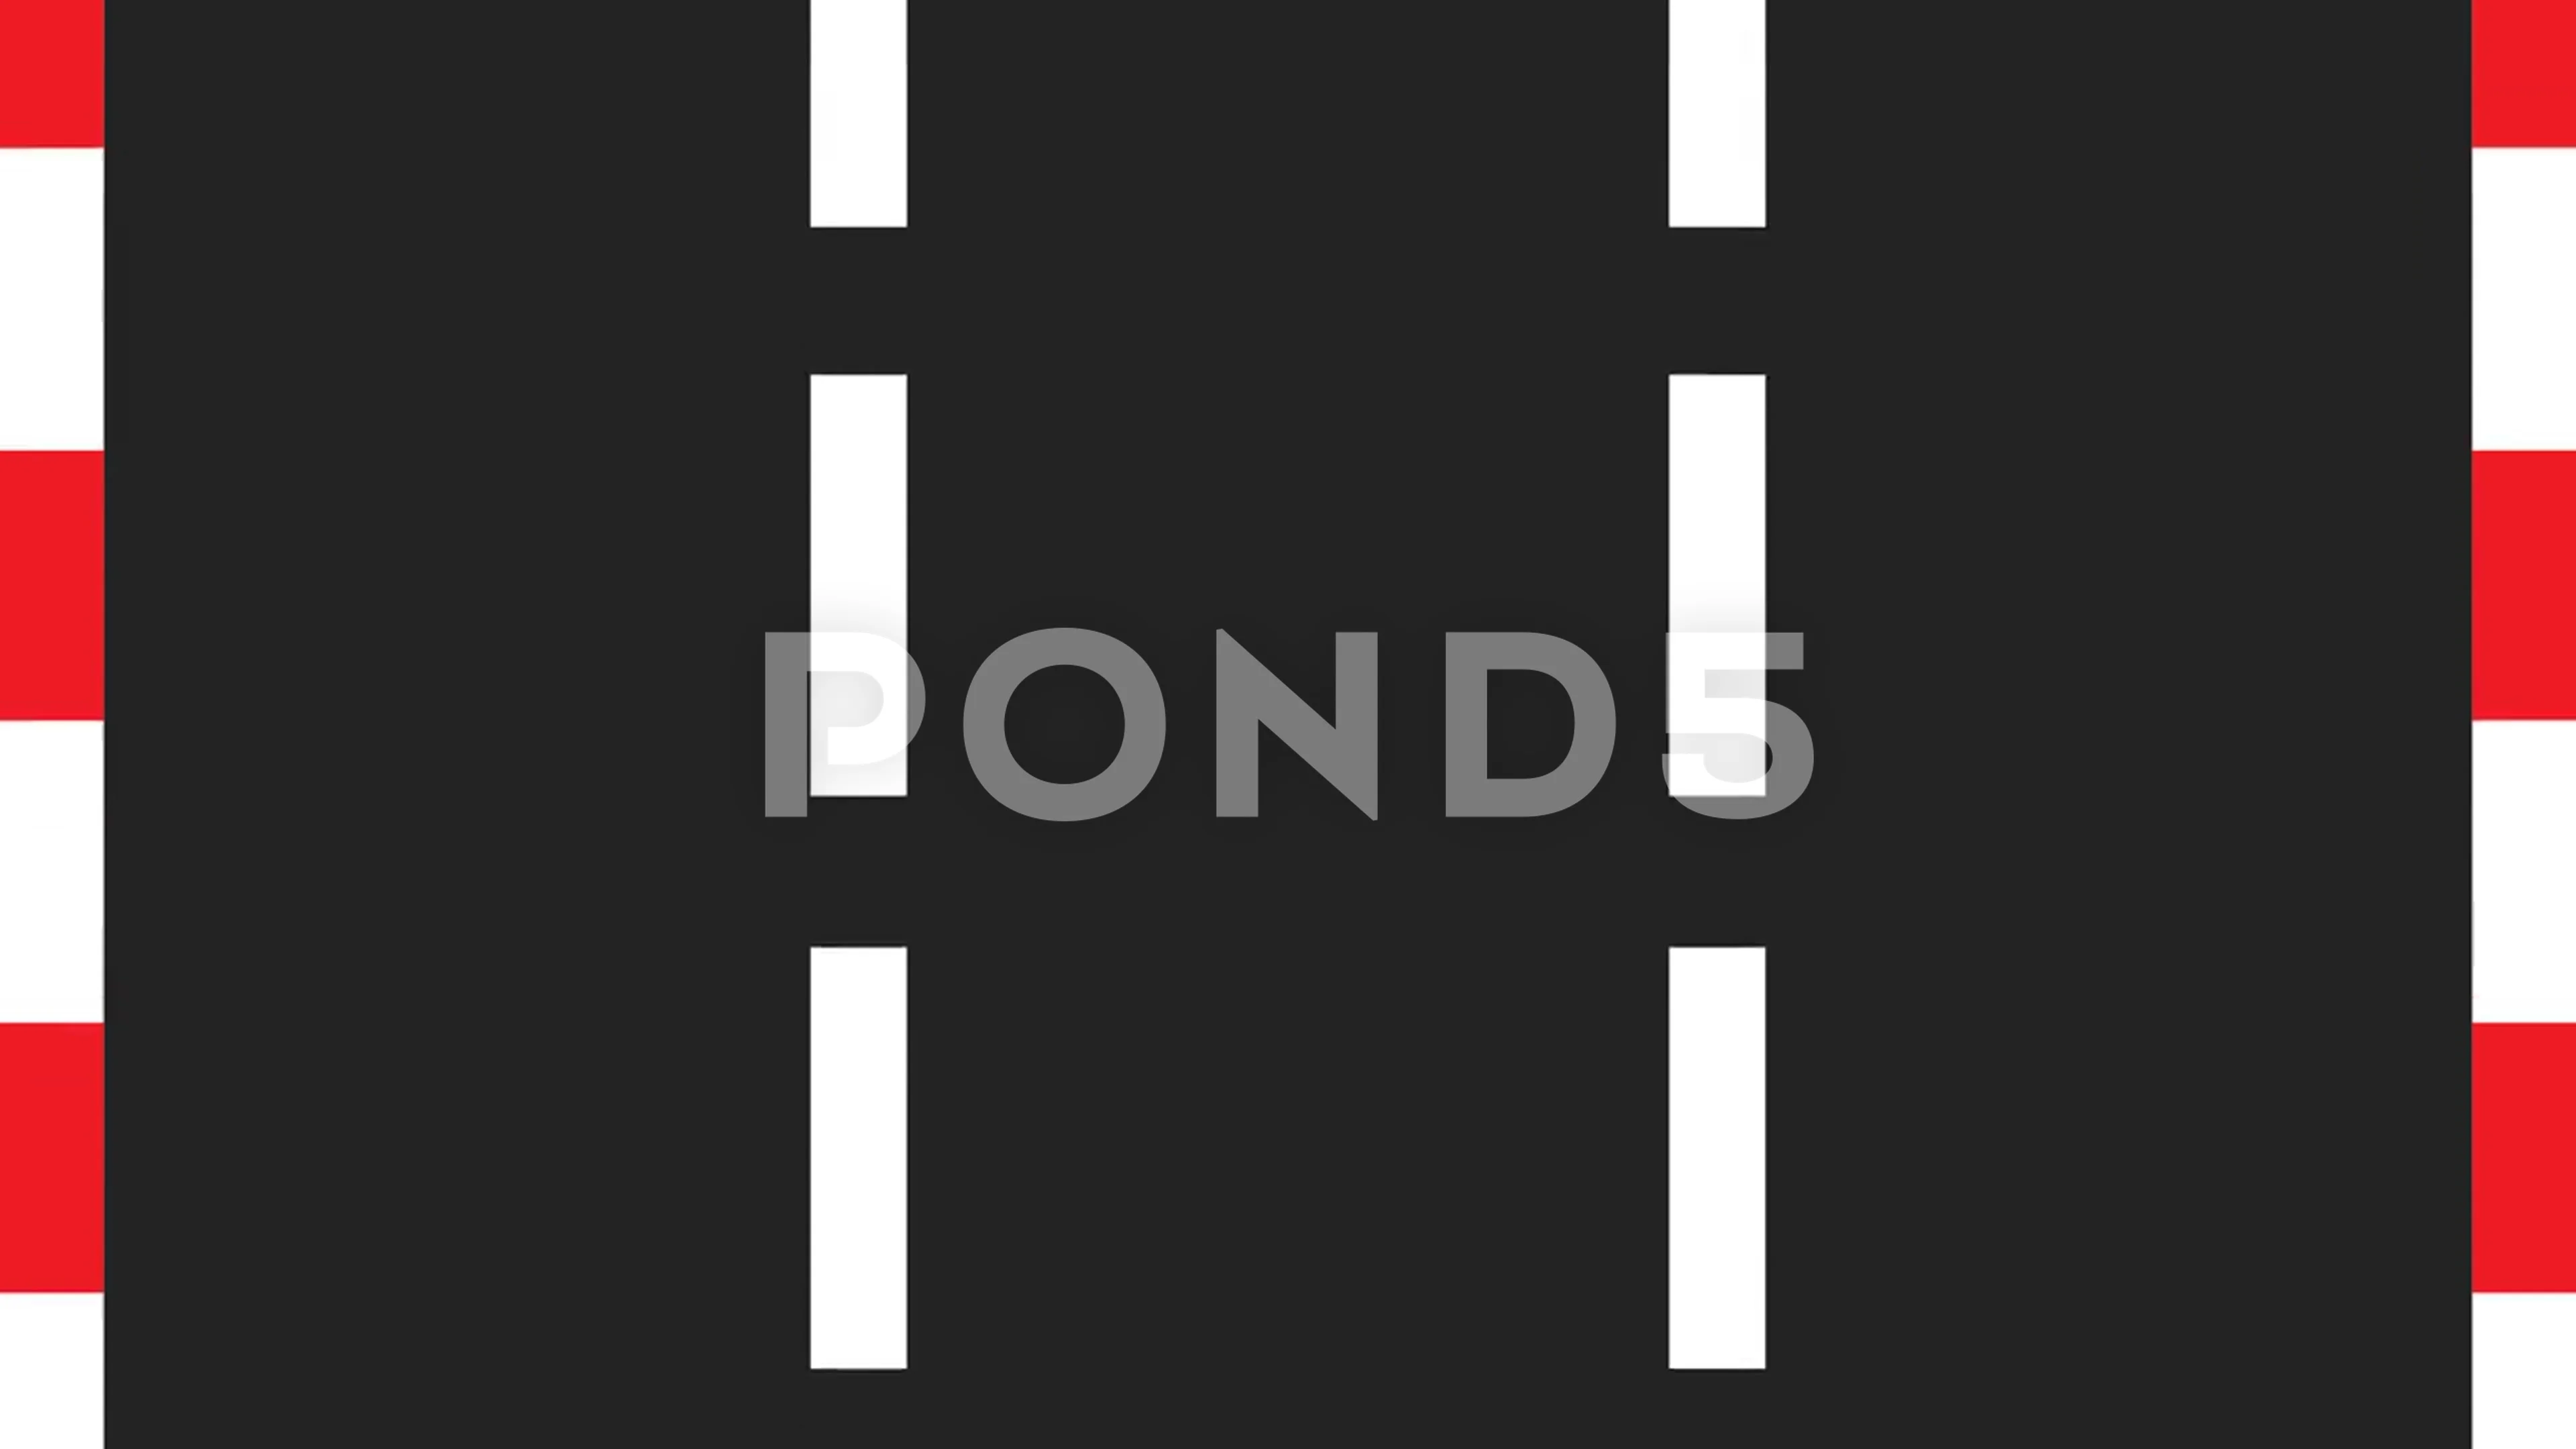 Three Lane Moving Road Animation, 2D Rac... | Stock Video | Pond5